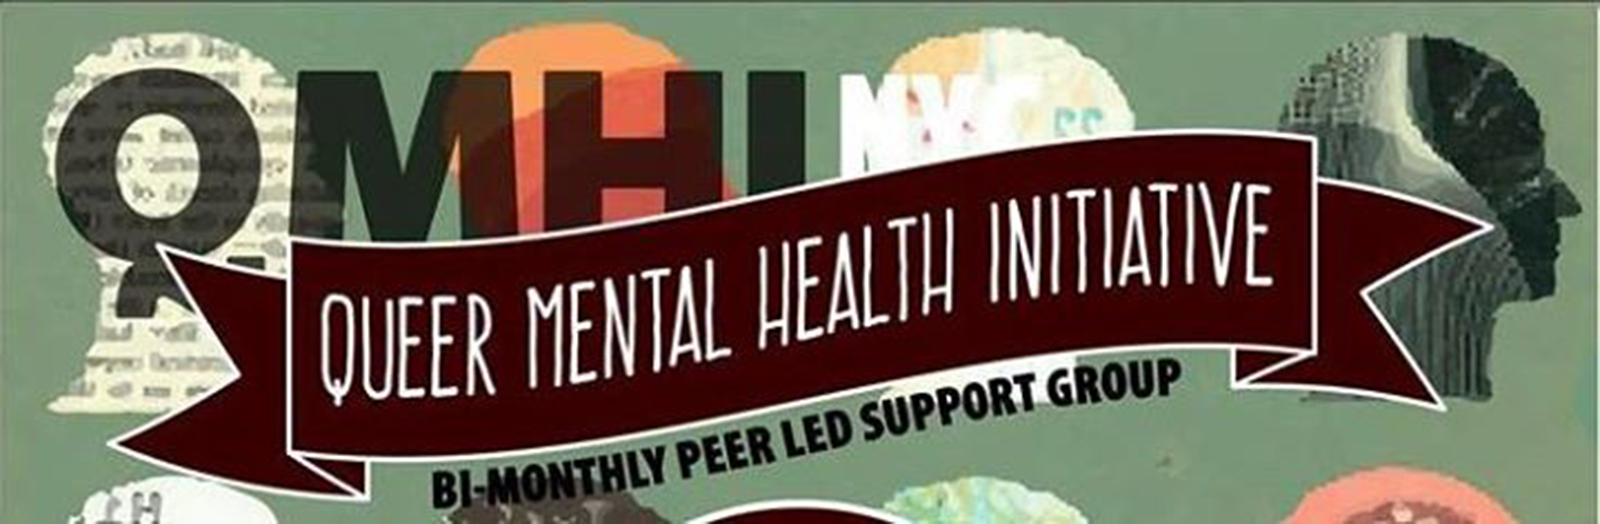 PEER SUPPORT: Queer Mental Health Initiative